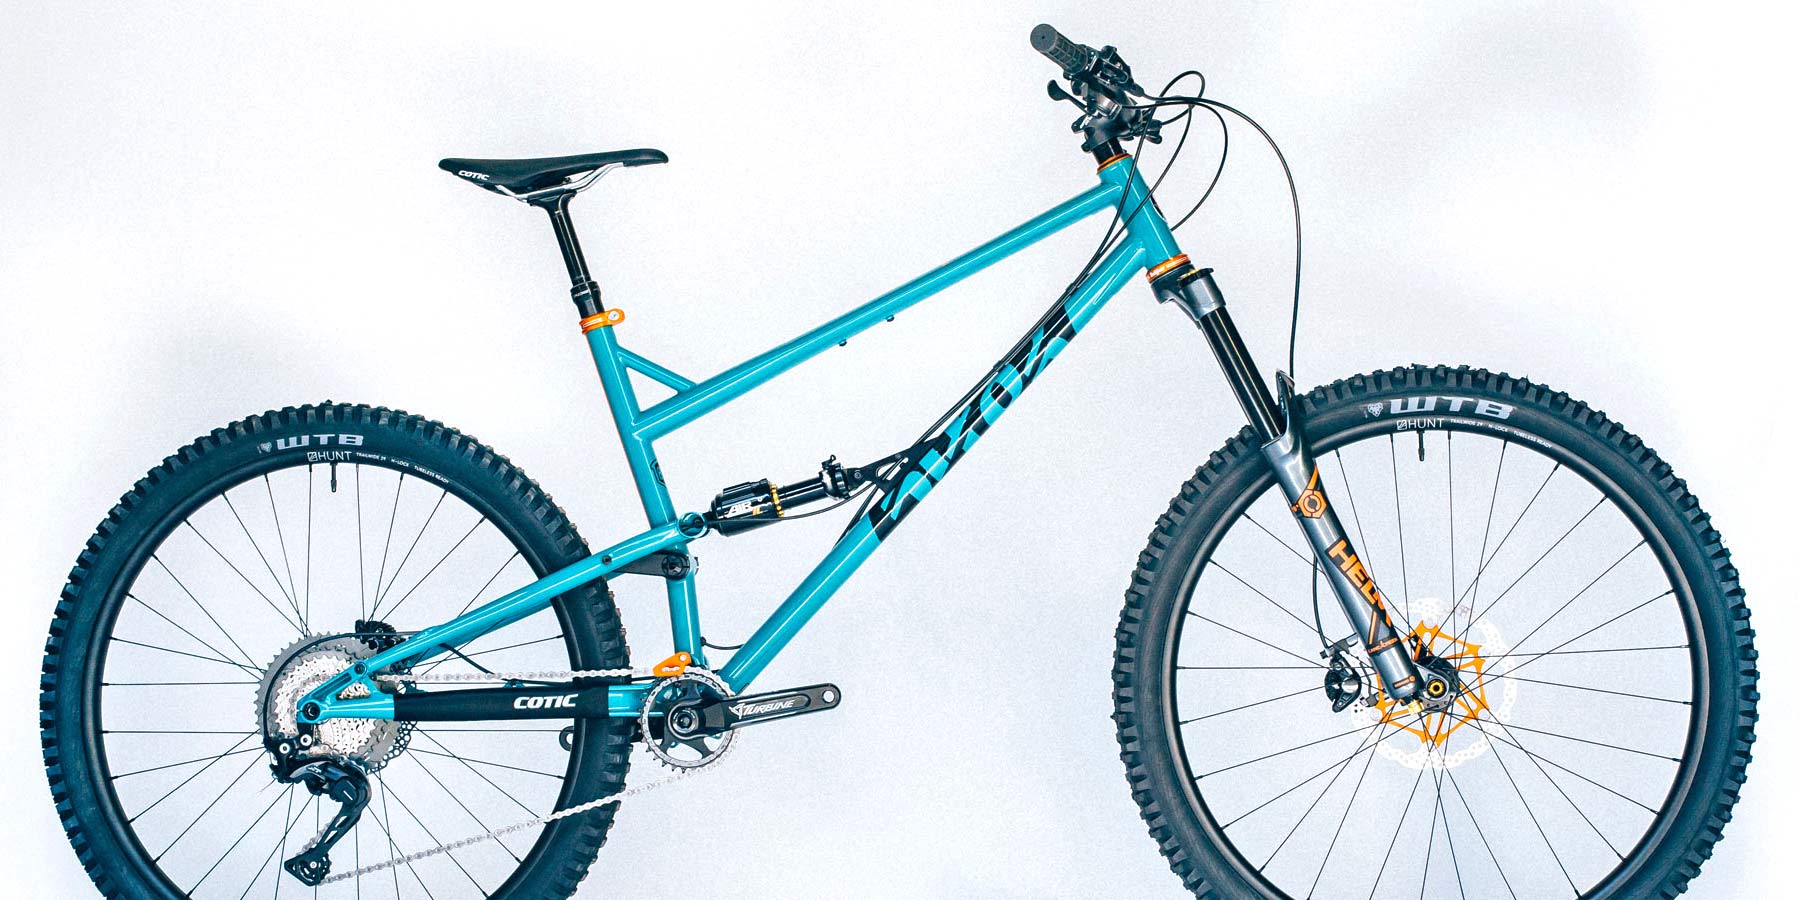 2019 Cotic RocketMAX long Longshot geometry 150mm travel full-suspension Reynolds 853 steel enduro mountain bike 29er 27.5+ mountain bike